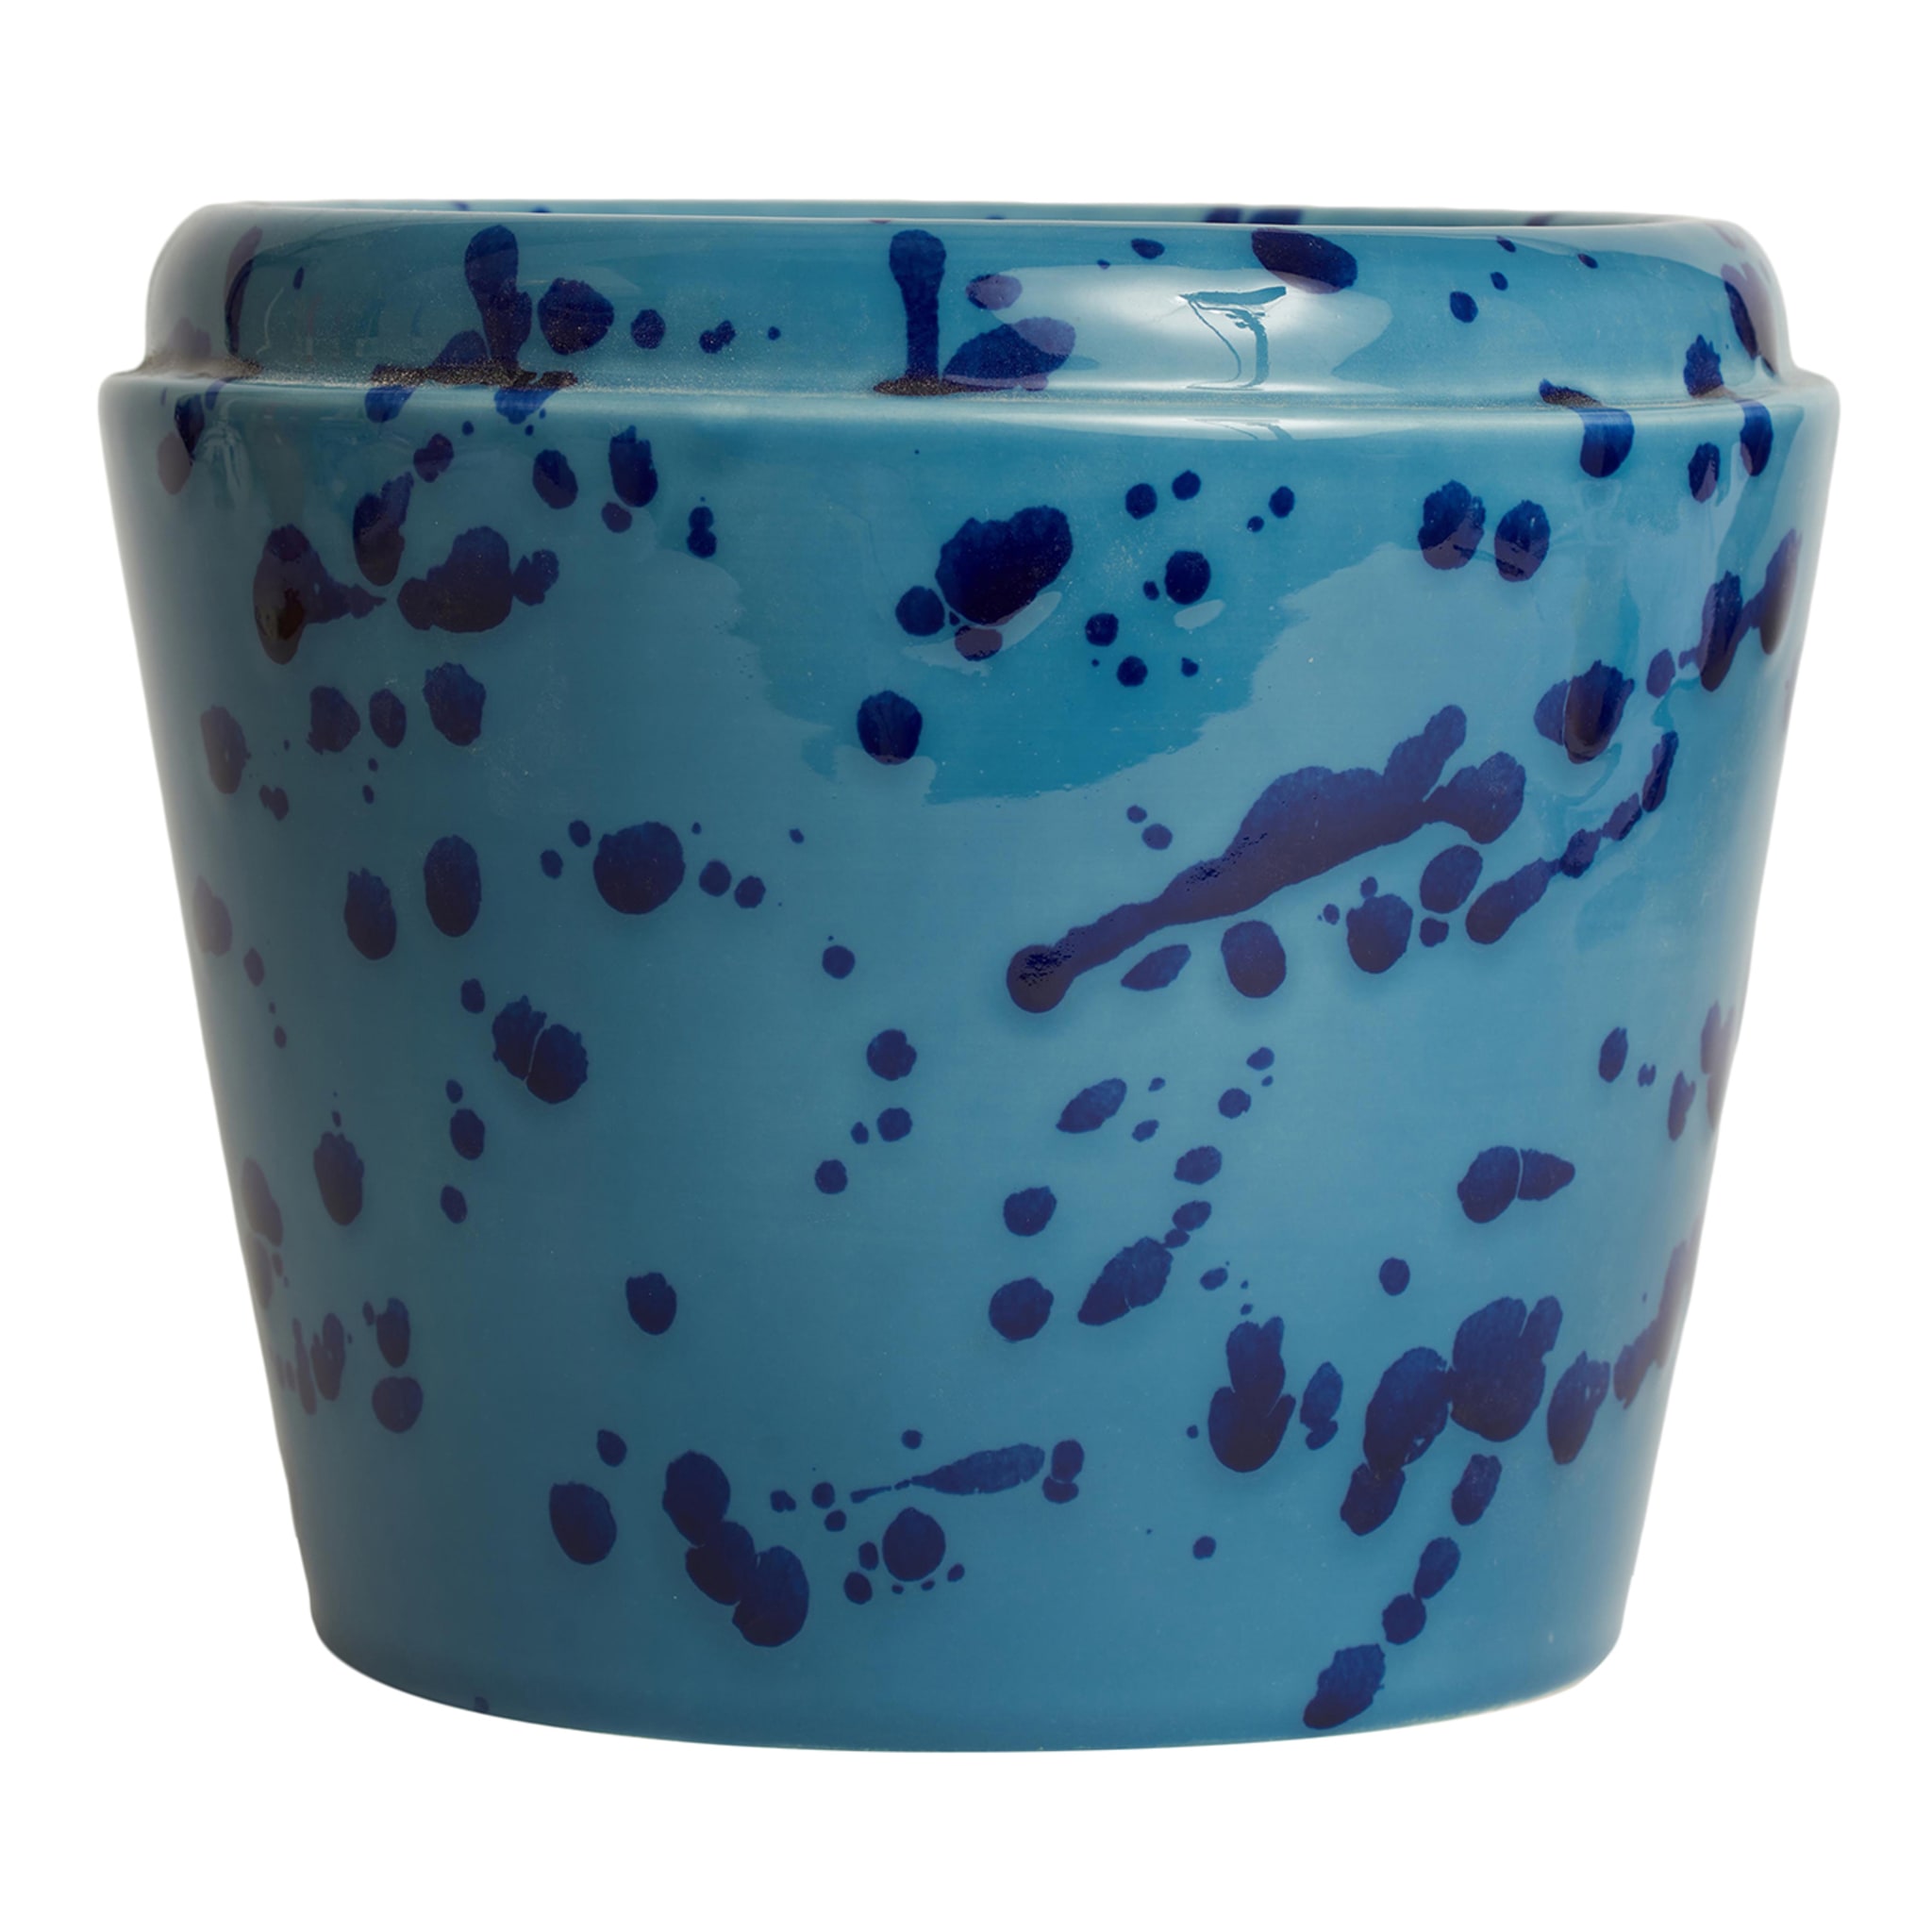 Celeste and Blue Ceramic Cachepot Vase - Main view